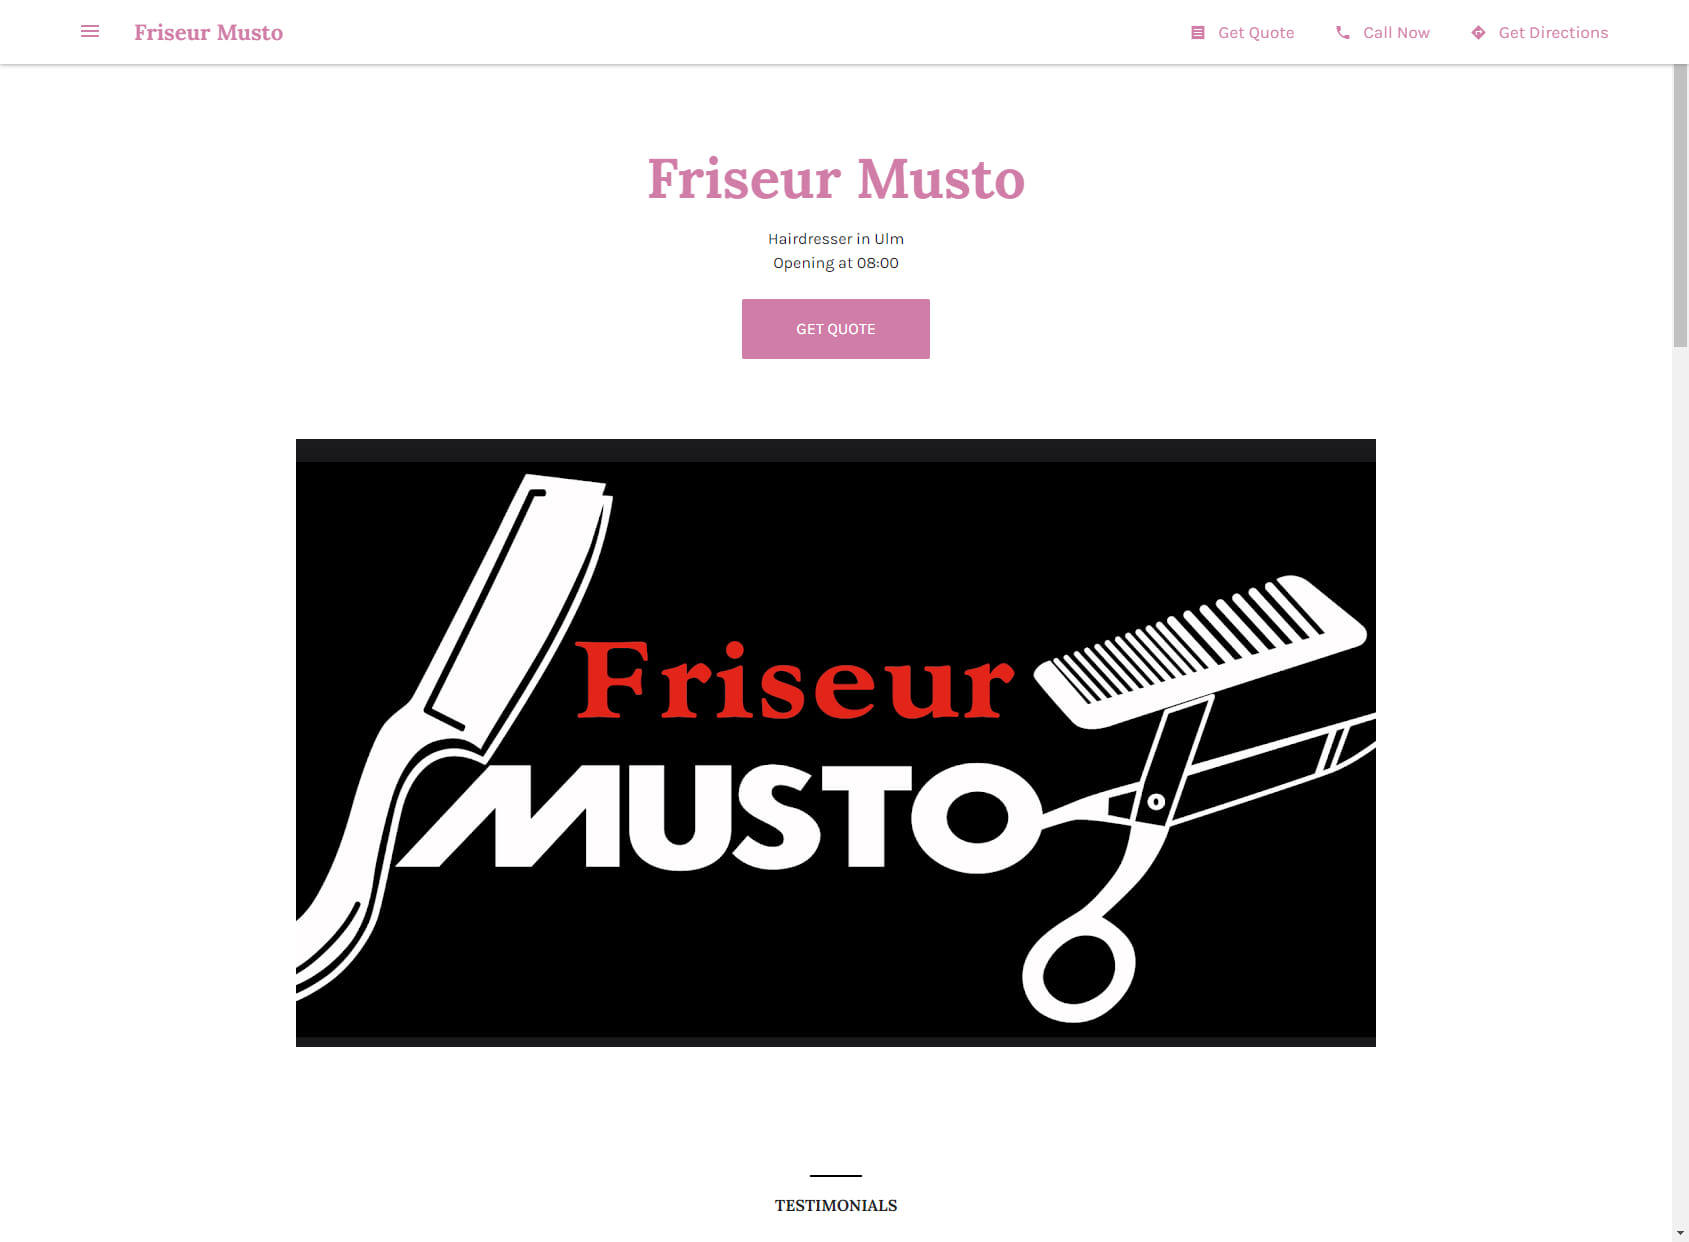 Friseur Musto